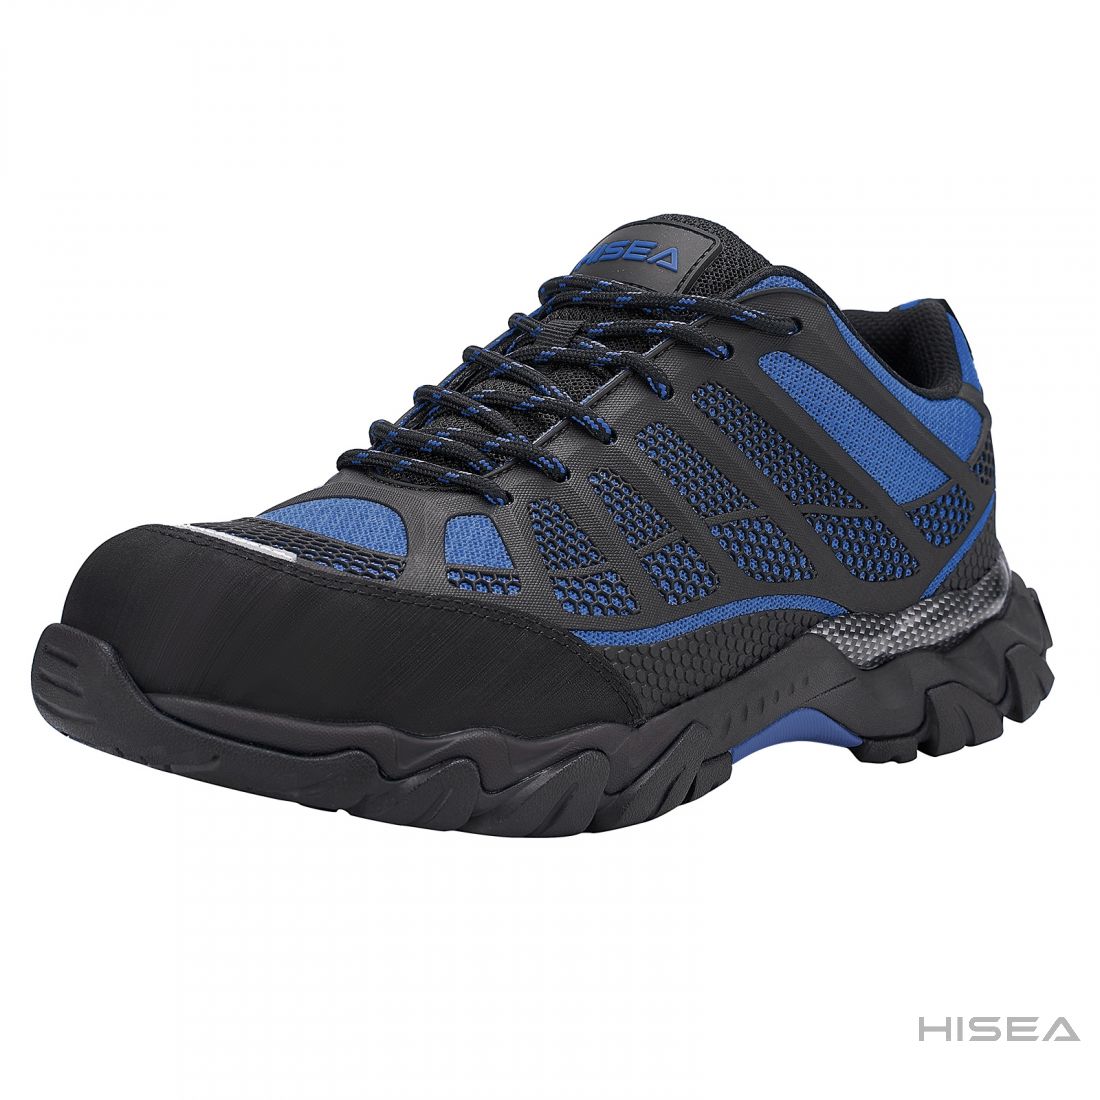 Unisex Steel Toe Work Shoes